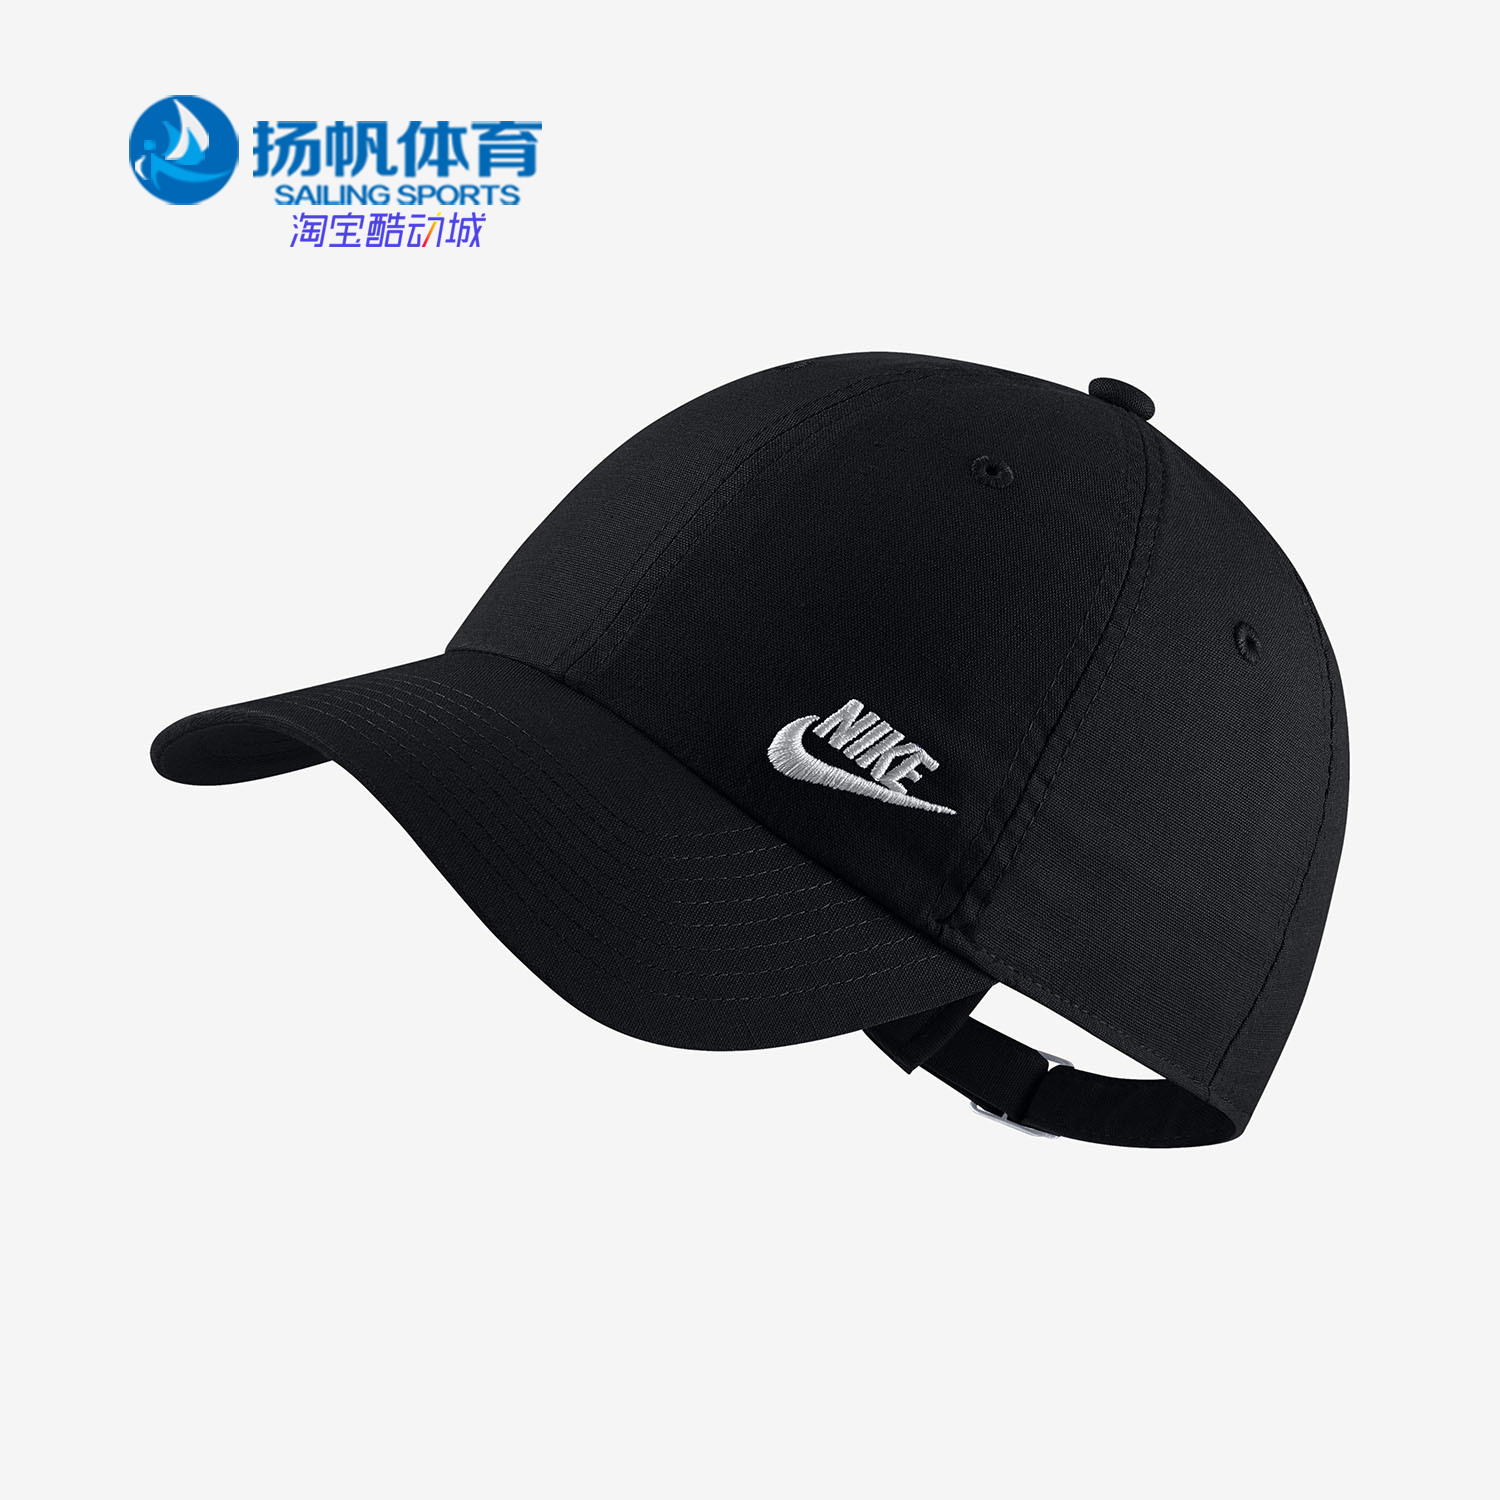 Nike/耐克正品2020新款遮阳鸭舌棒球帽户外运动休闲帽子AO8662